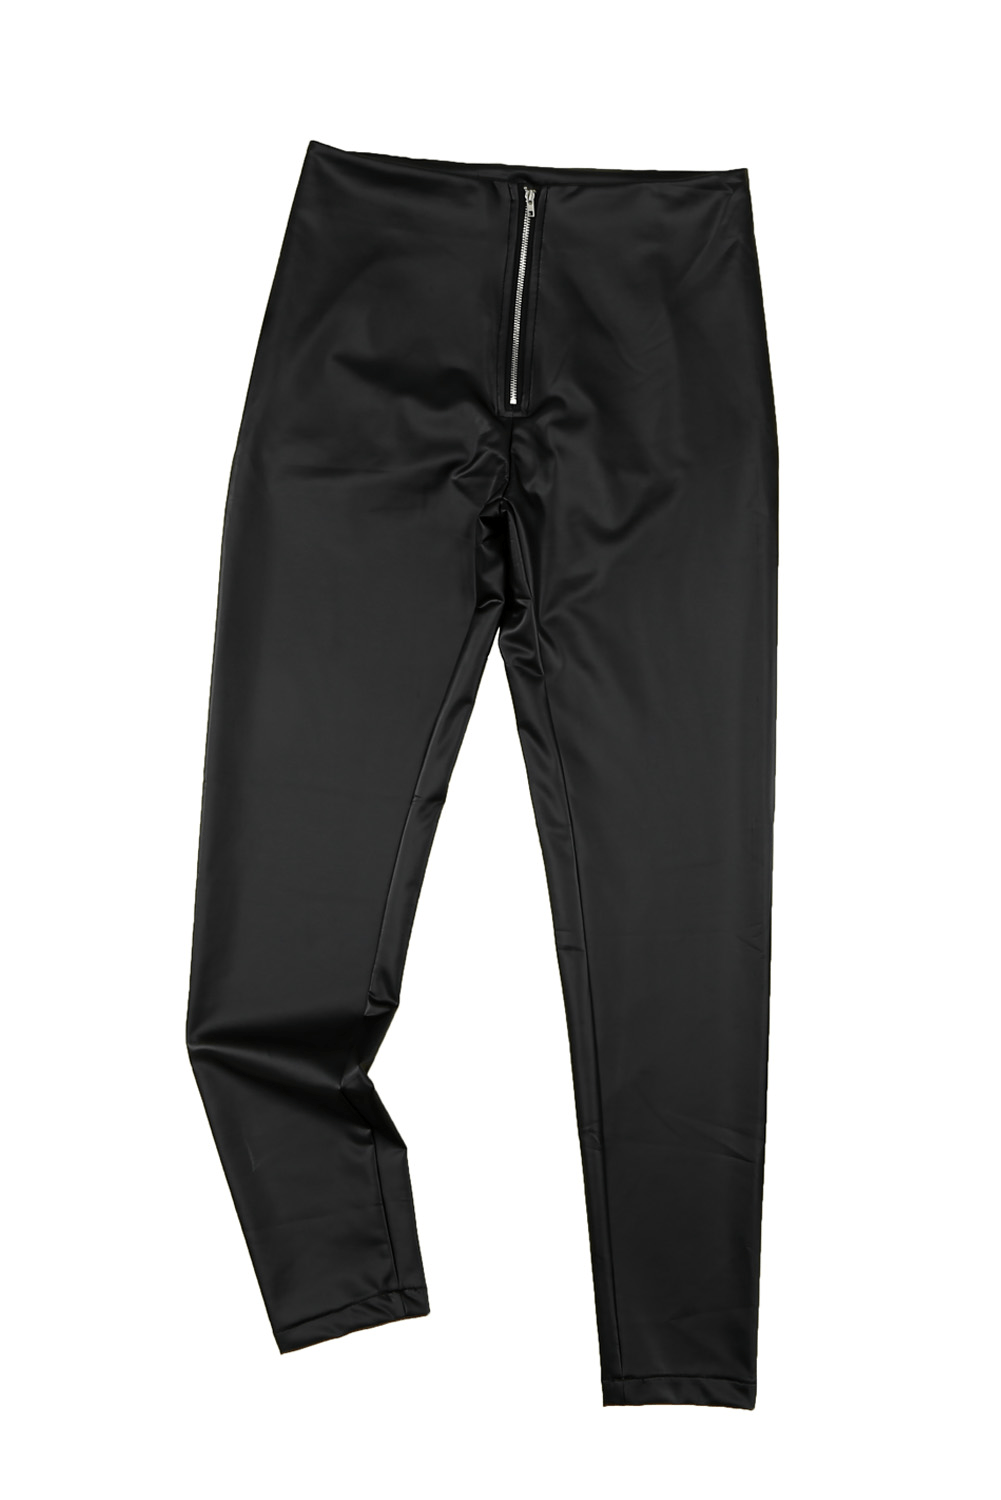 Black Solid Skinny Zipper Pu Pants - Shah S. Sahota